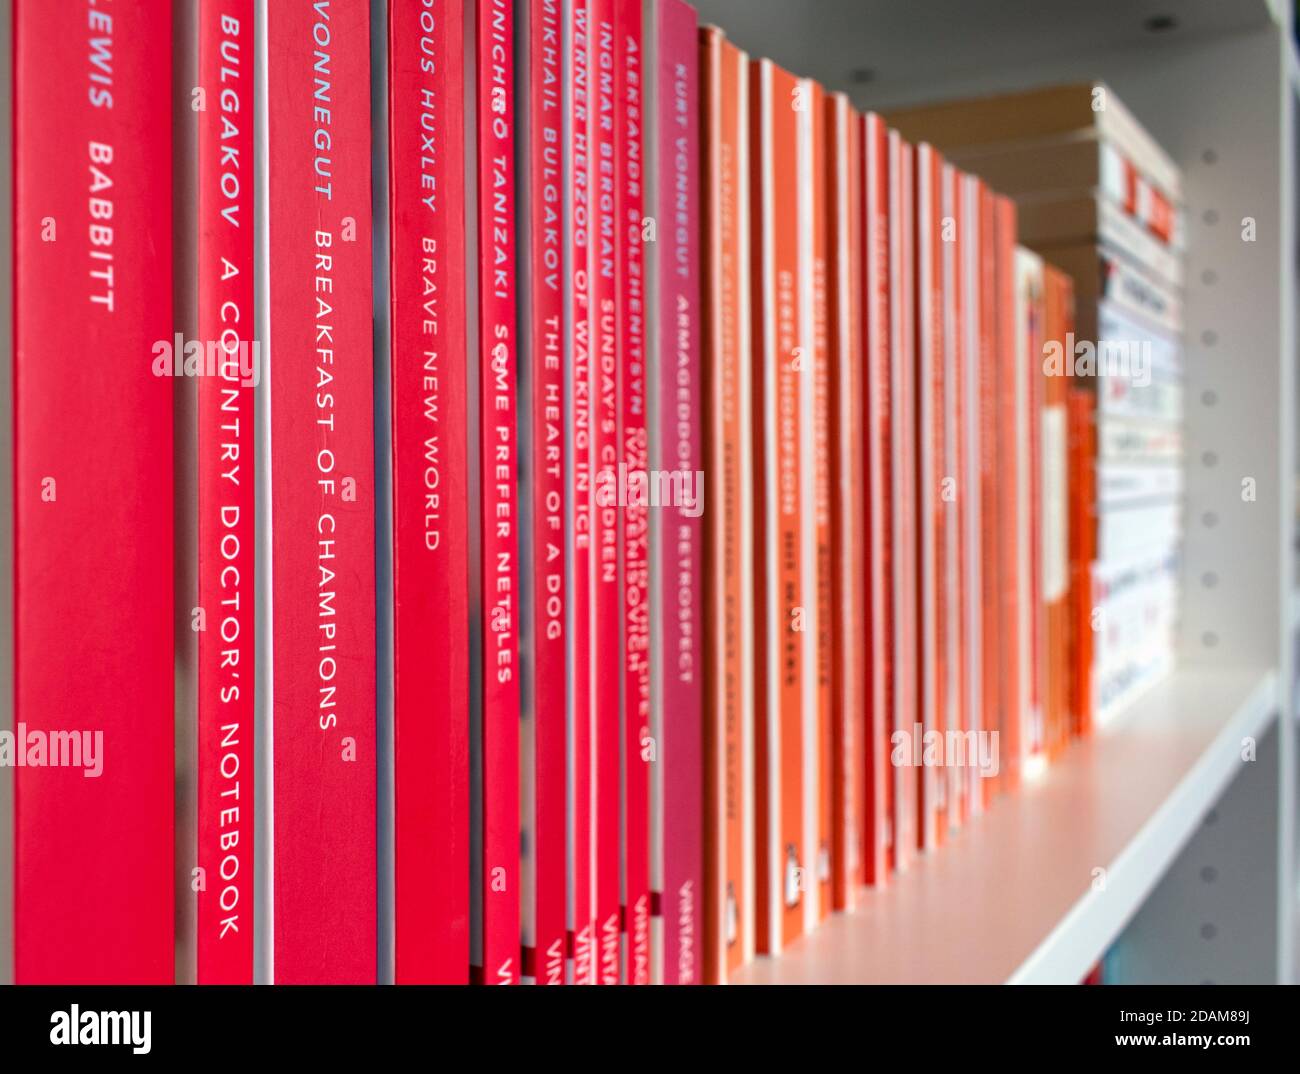 Shelf with classic orange Penguin books. Stock Photo